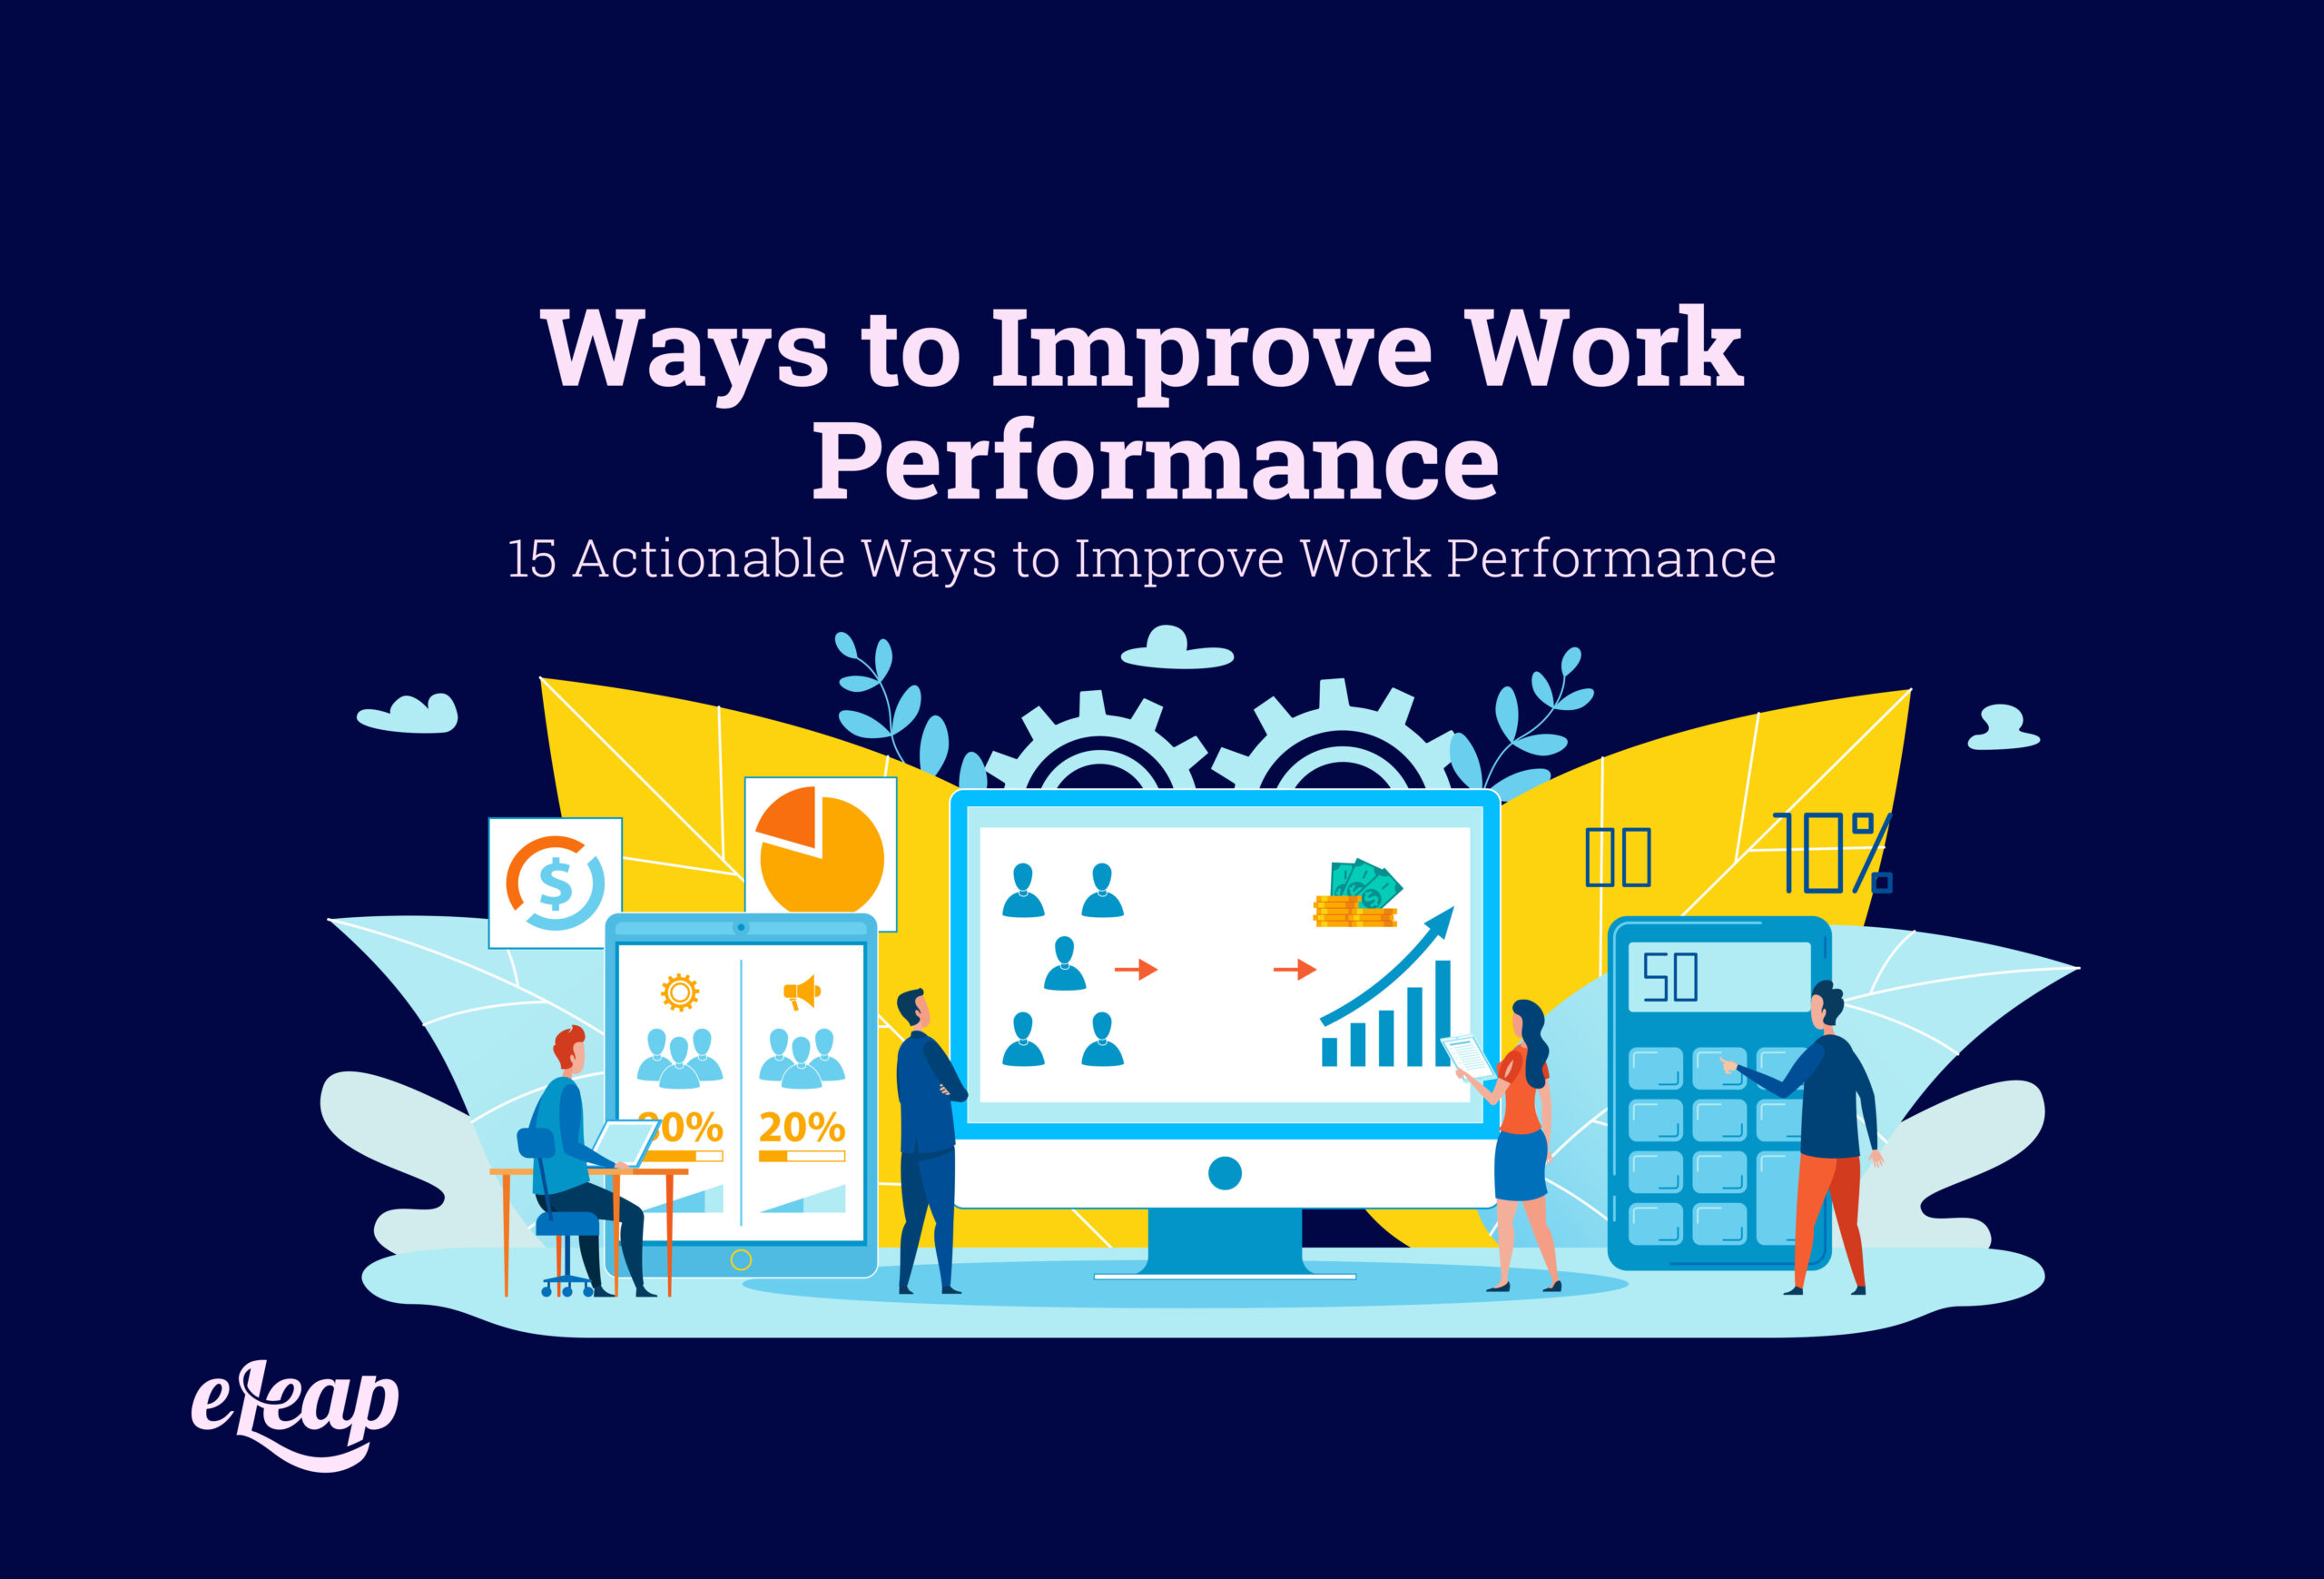 15 Actionable Ways to Improve Work Performance